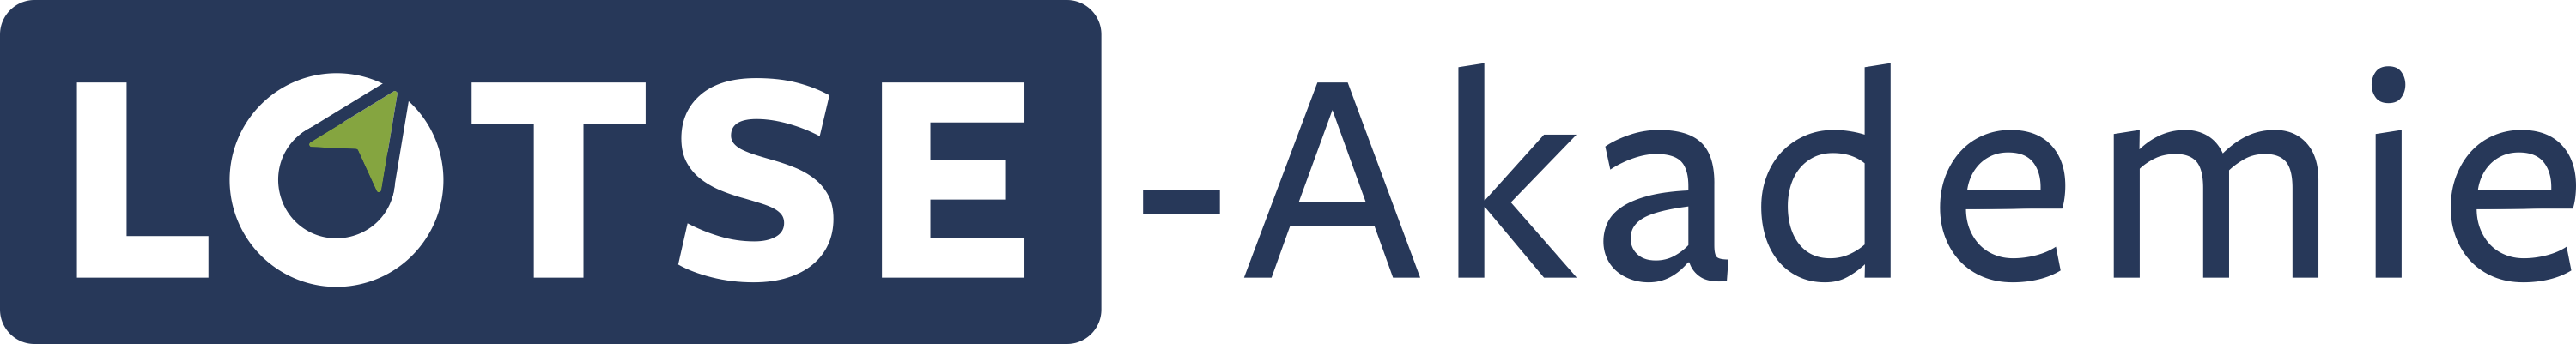 LOTSE-Akademie Logo